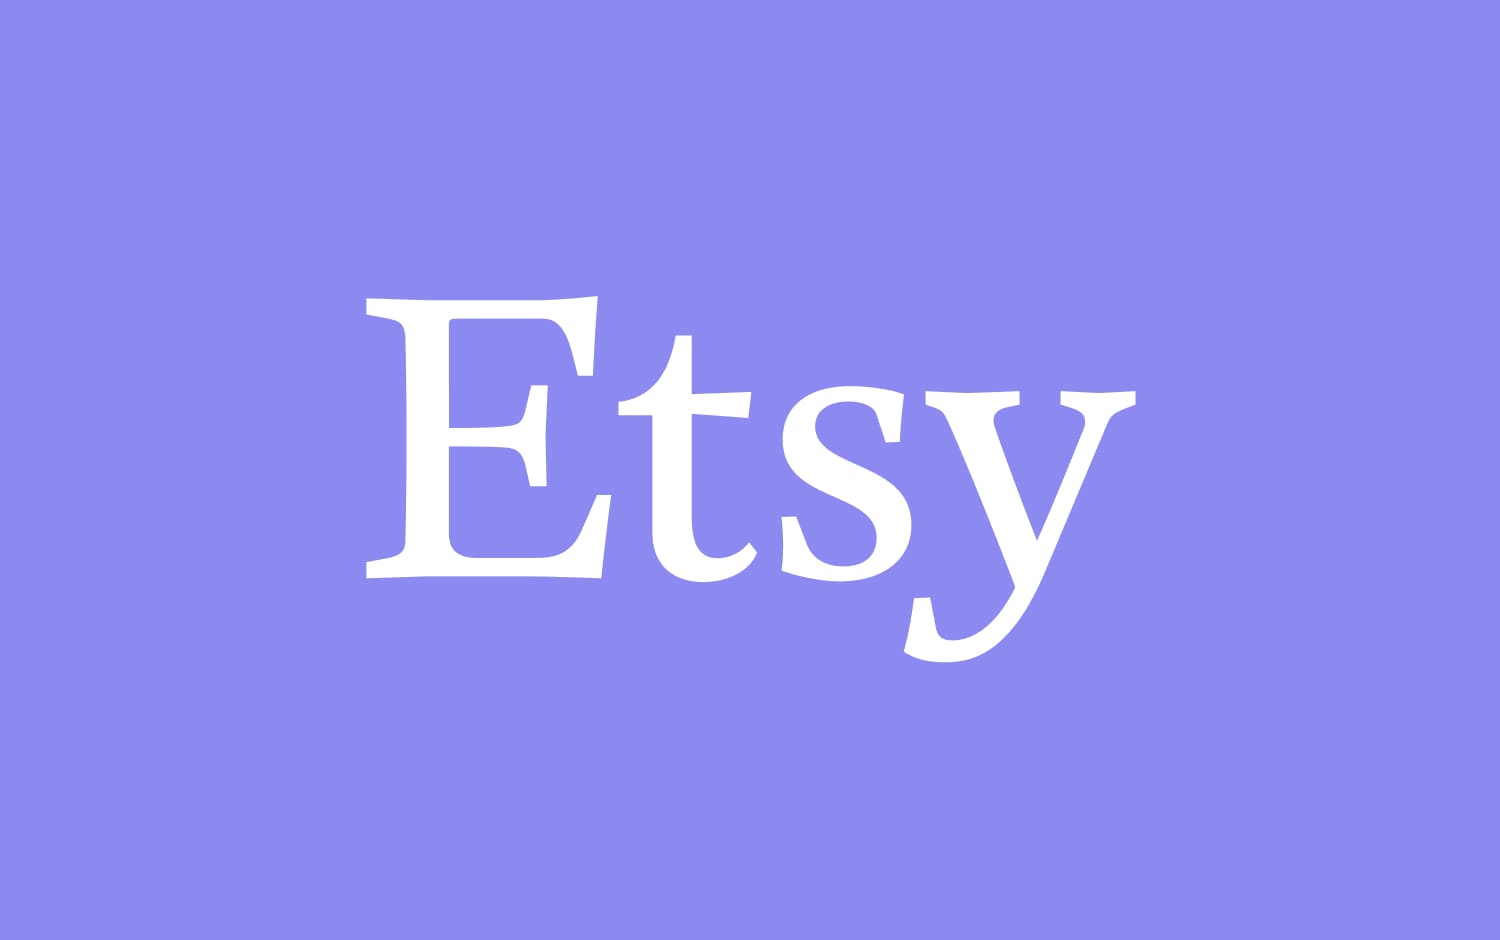 Etsy-logo met witte letters op een lavendelblauwe achtergrond